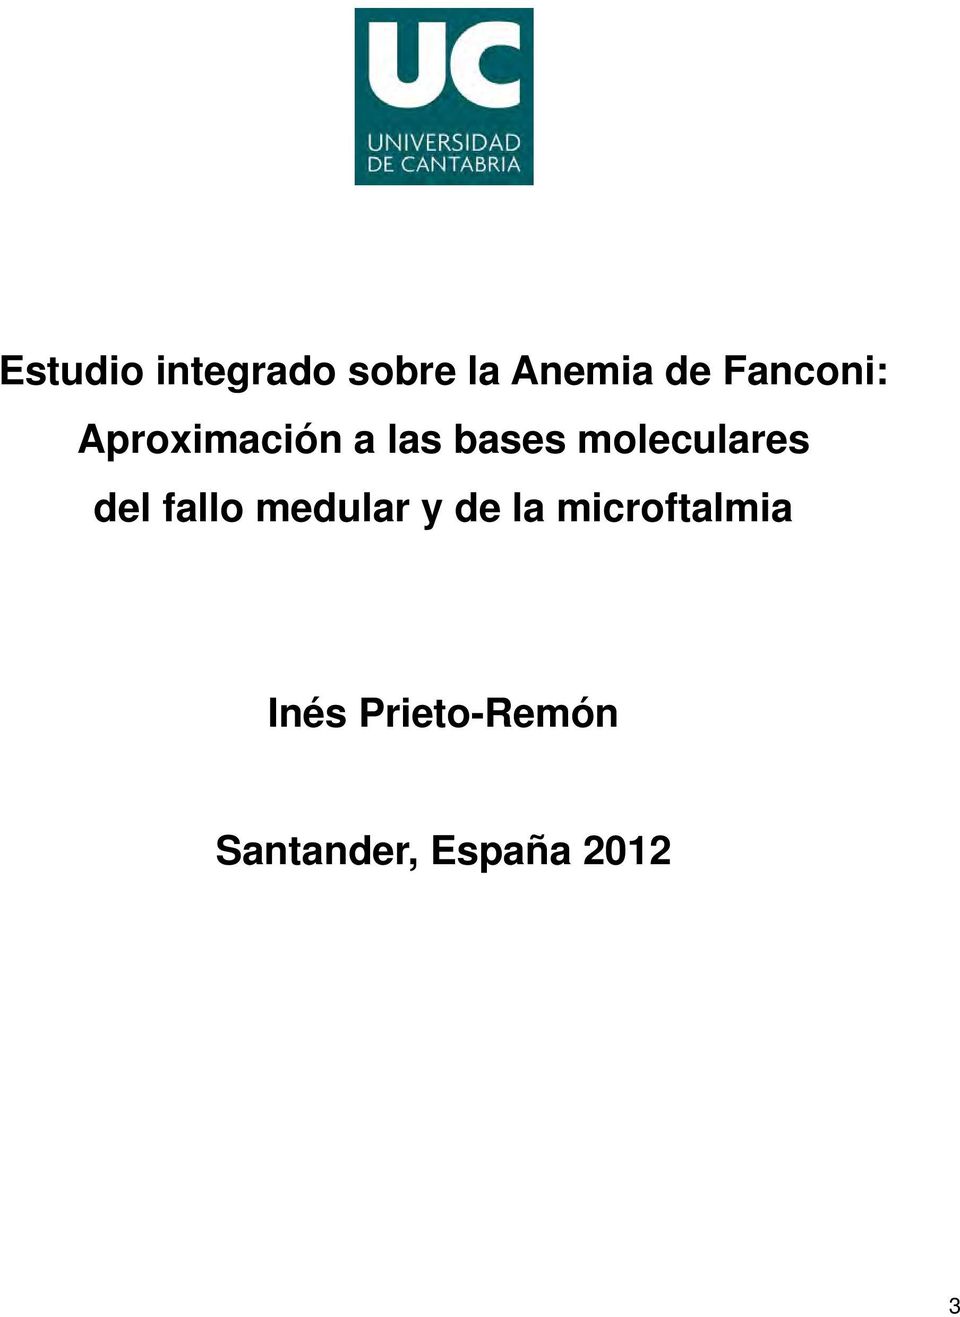 Mecanismos Epigenéticos en Inés Prieto-Remón Enfermedades Esqueléticas Prevalentes Santander, España 2012 Role of